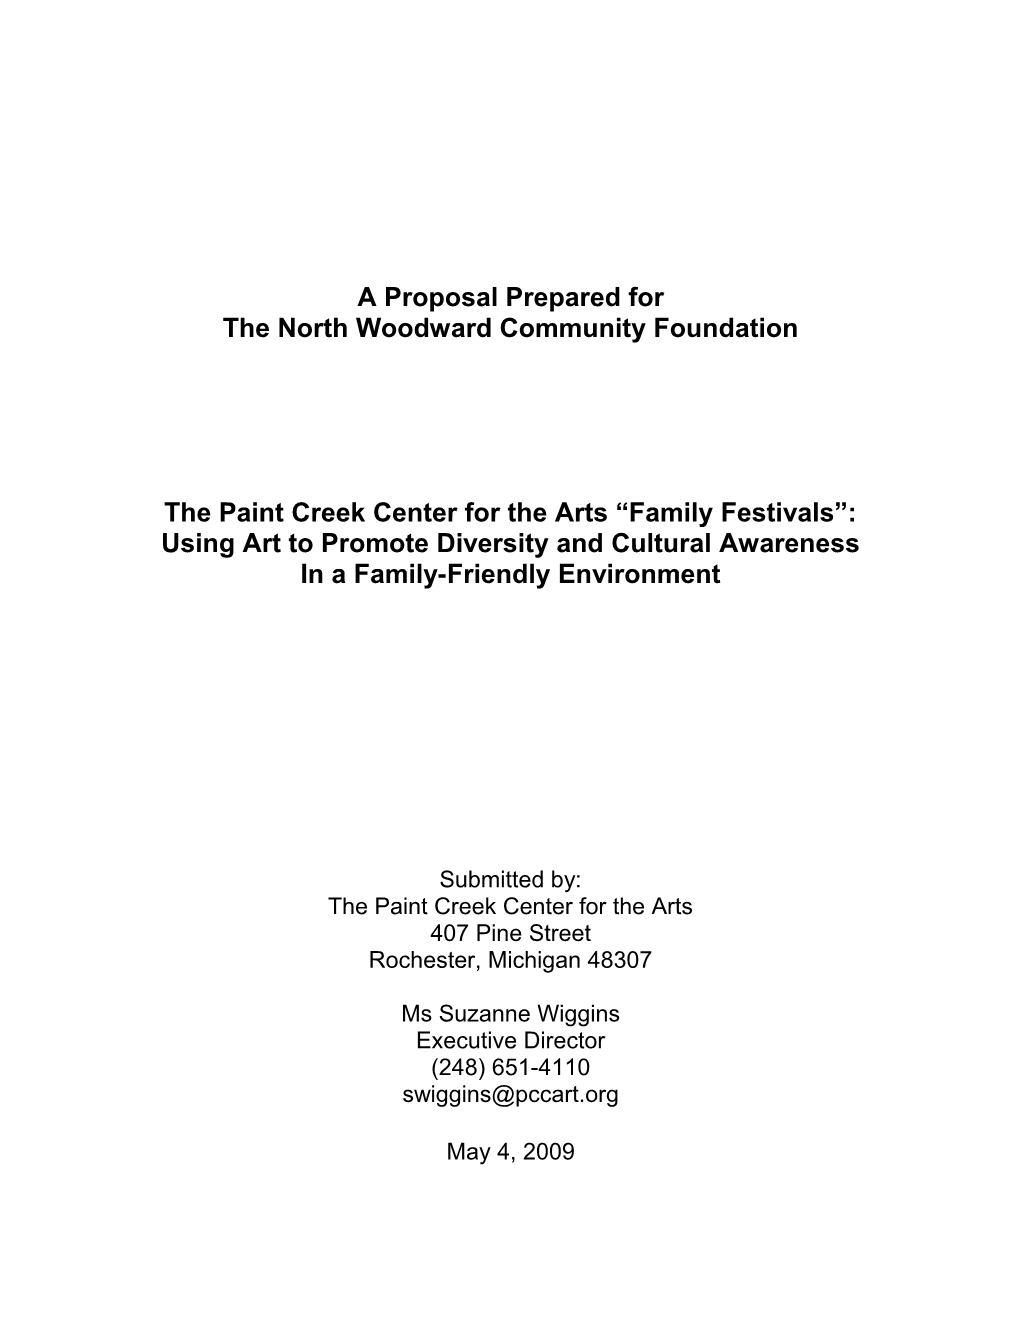 The North Woodward Community Foundation